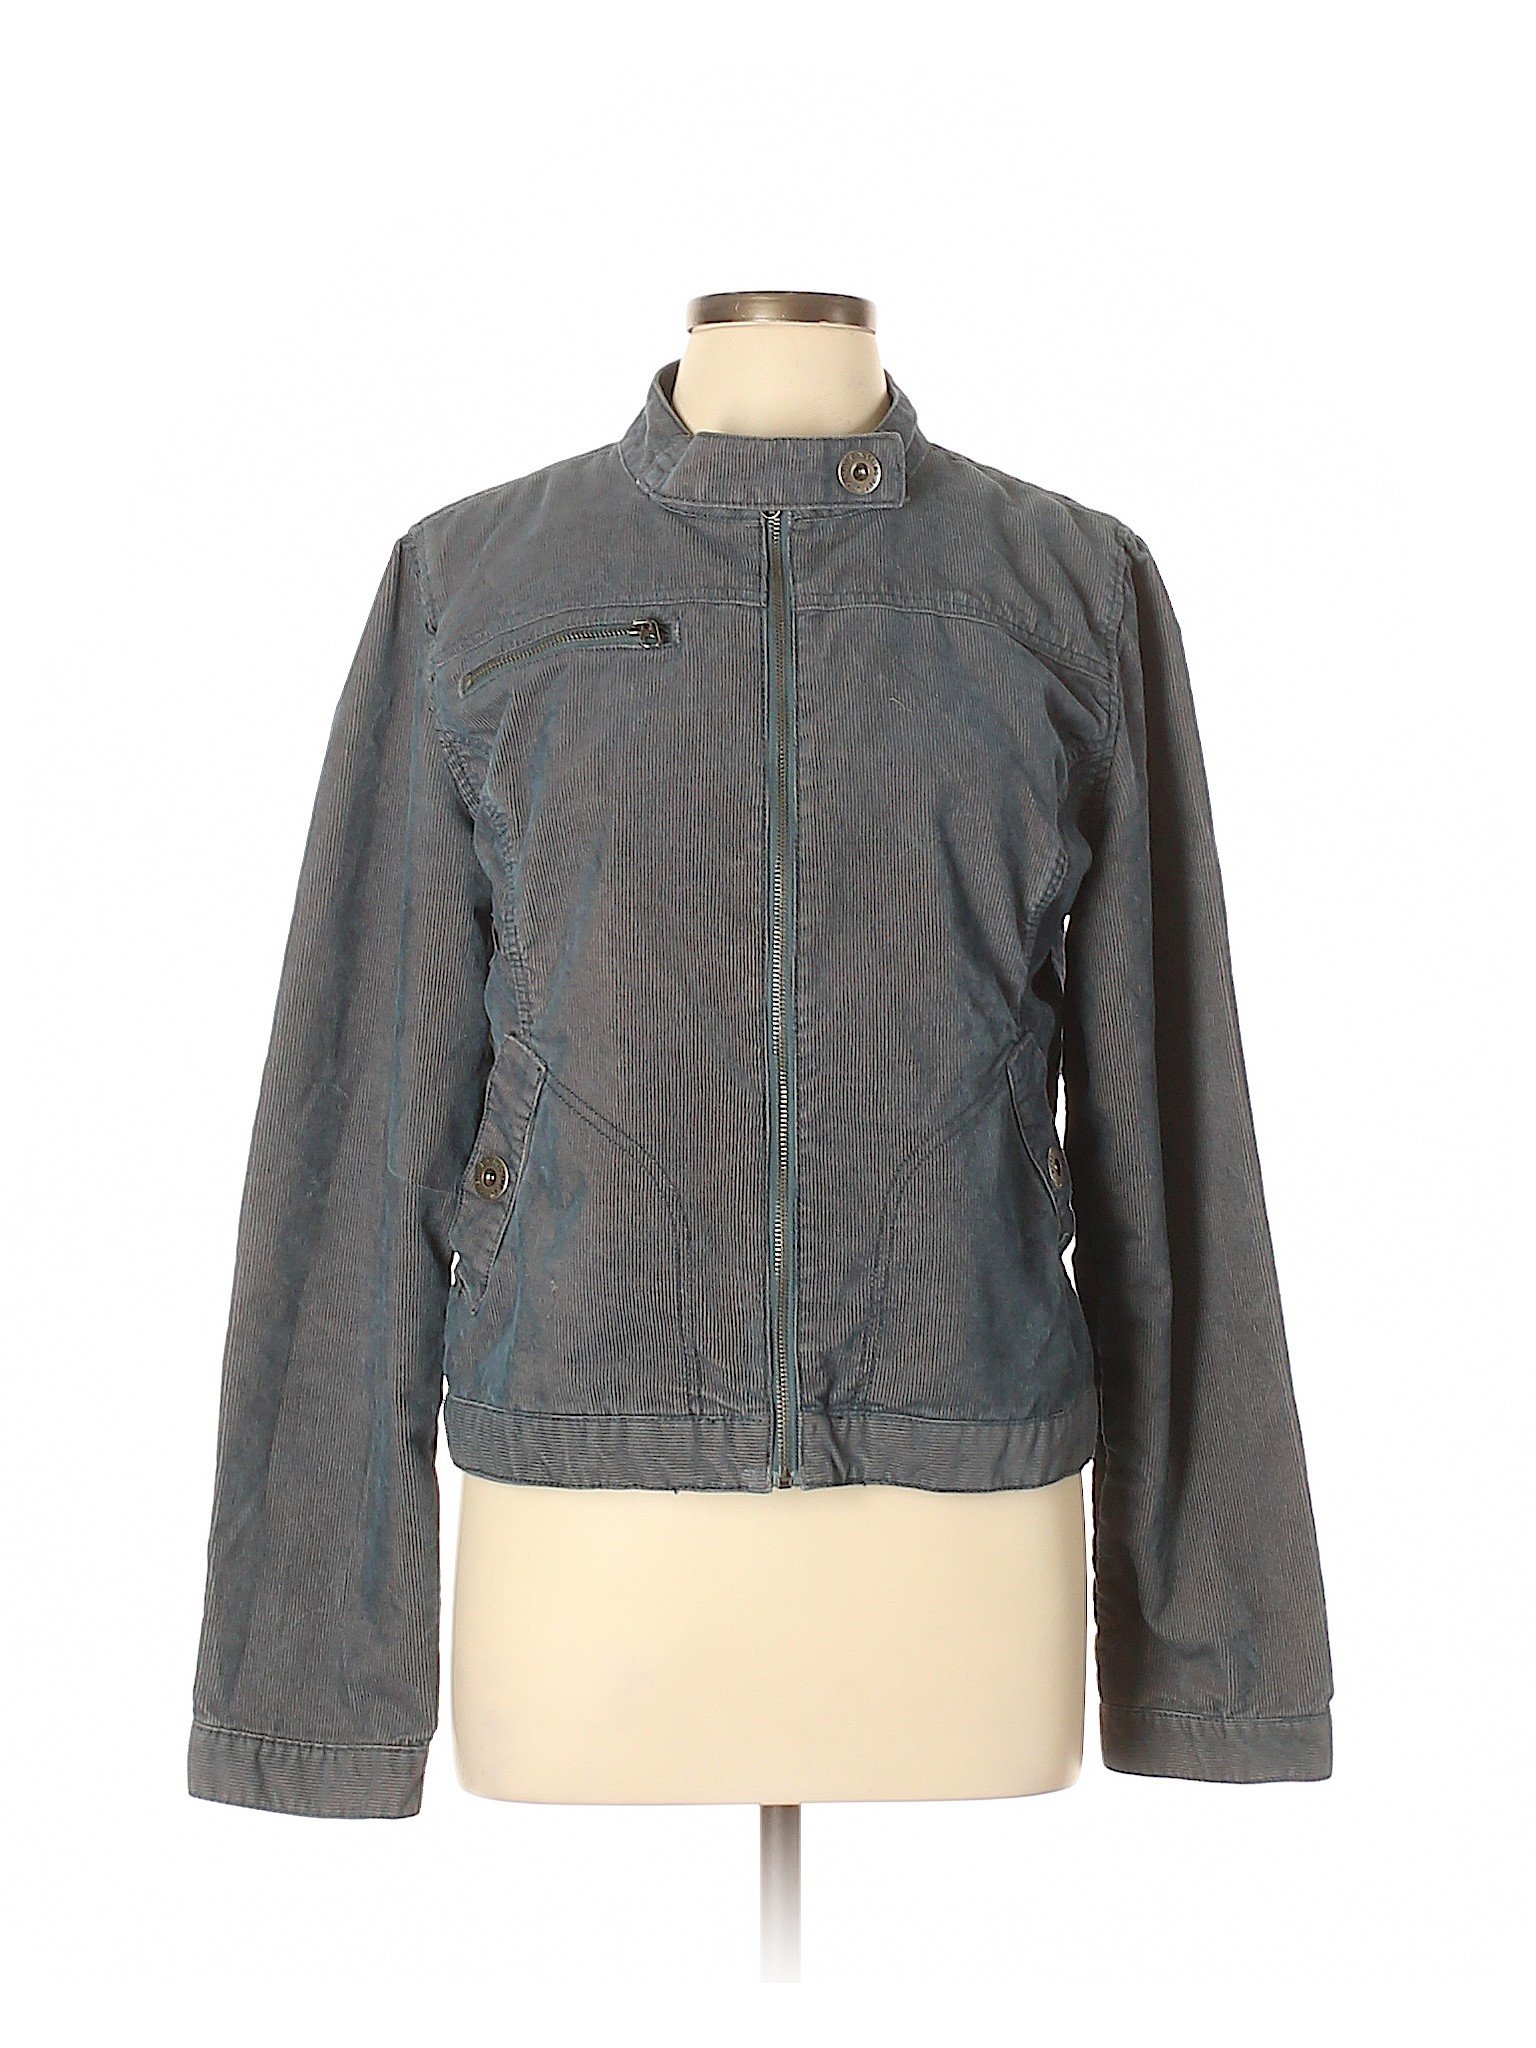 Mossimo Supply Co. Women Blue Denim Jacket XL | eBay